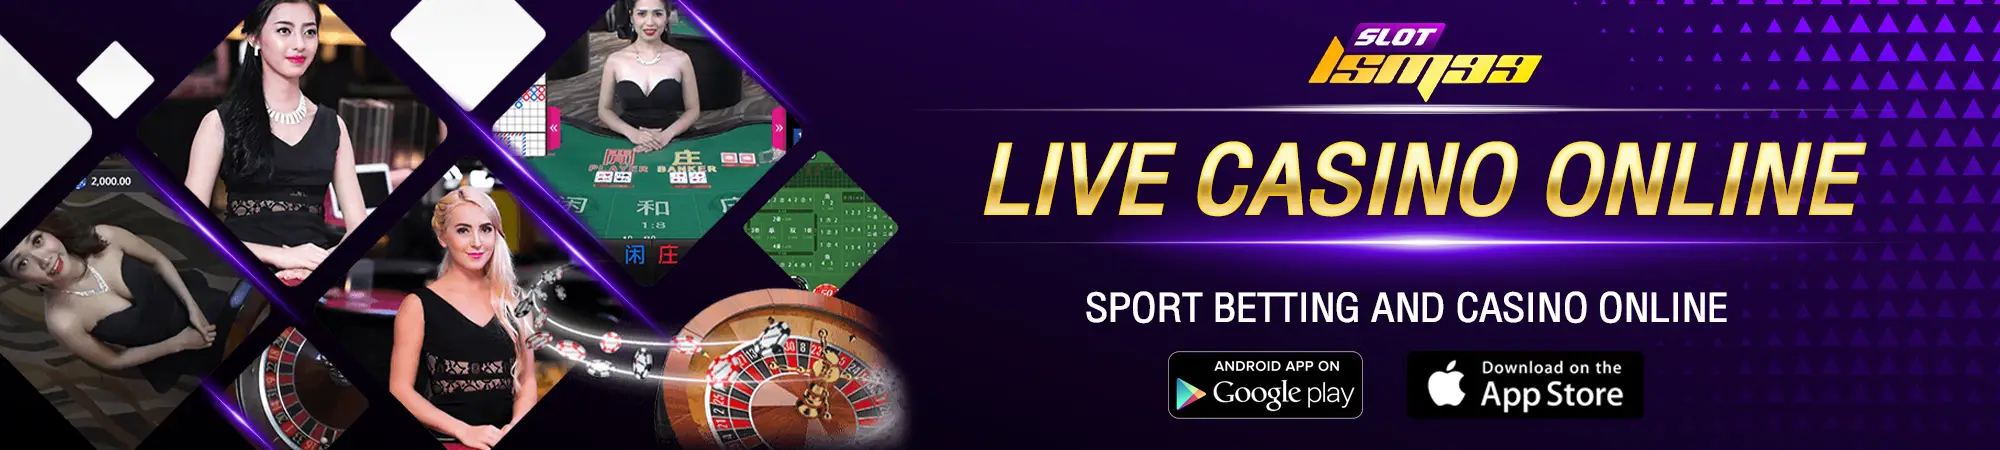 slot lsm99 live casino